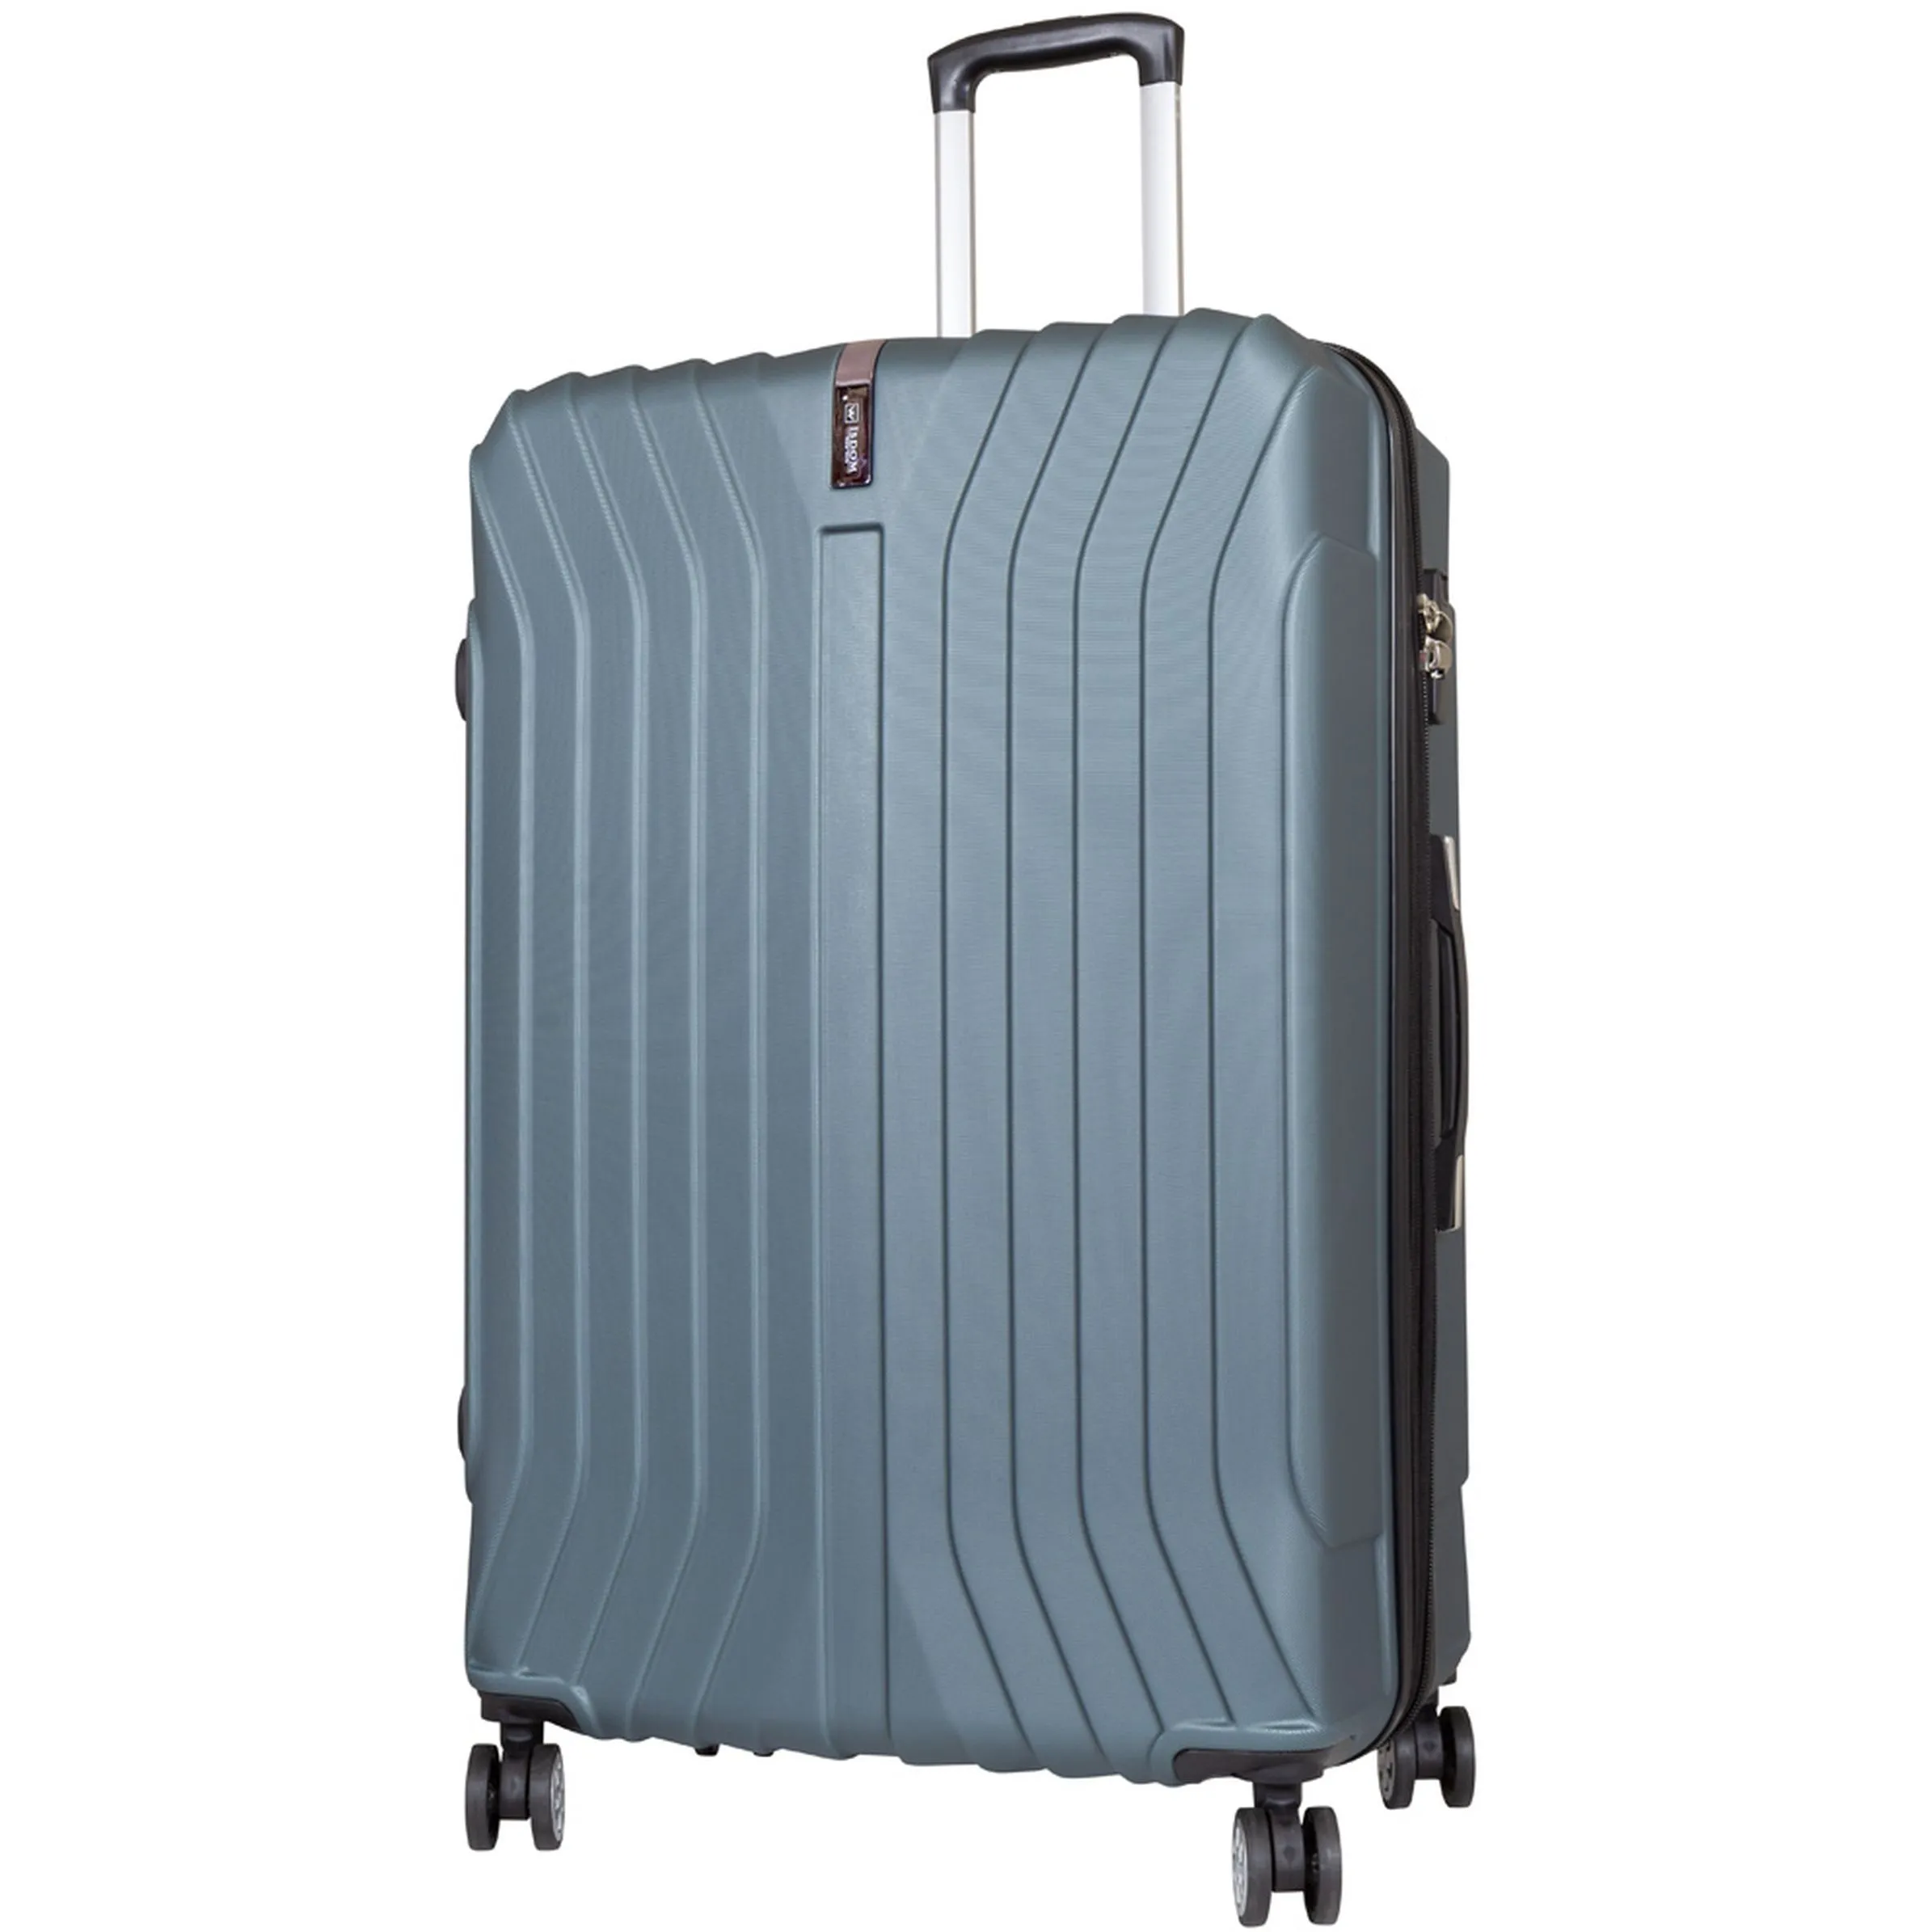 Koffer/Taschen Koffer Almeria 119L 83x54x33 Grau 894500 GRAU 1